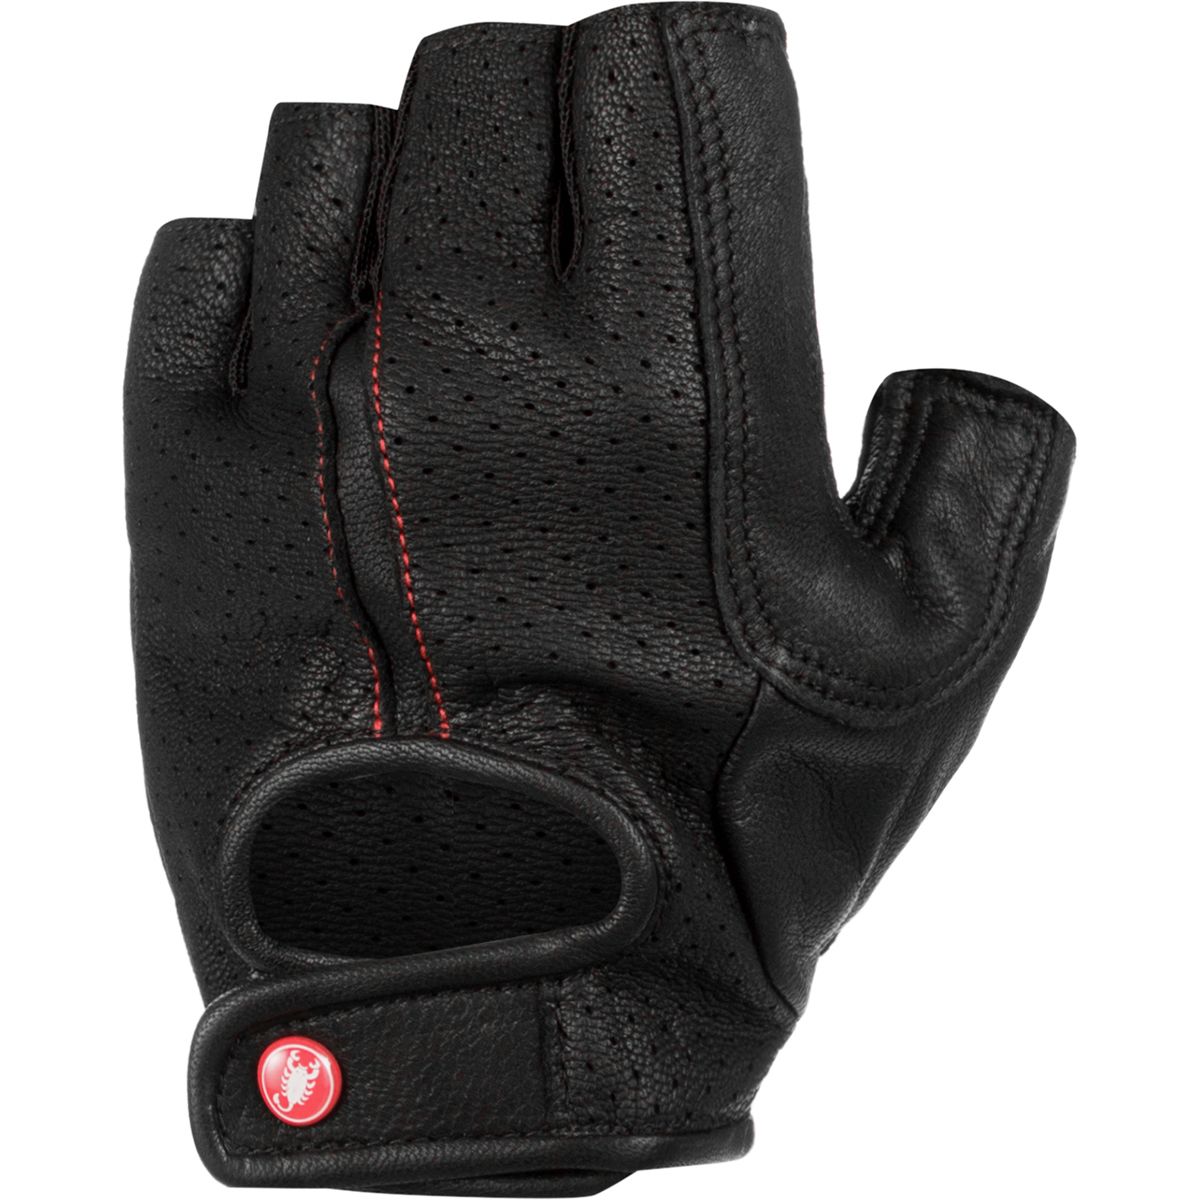 Castelli Maestro Glove - Men's